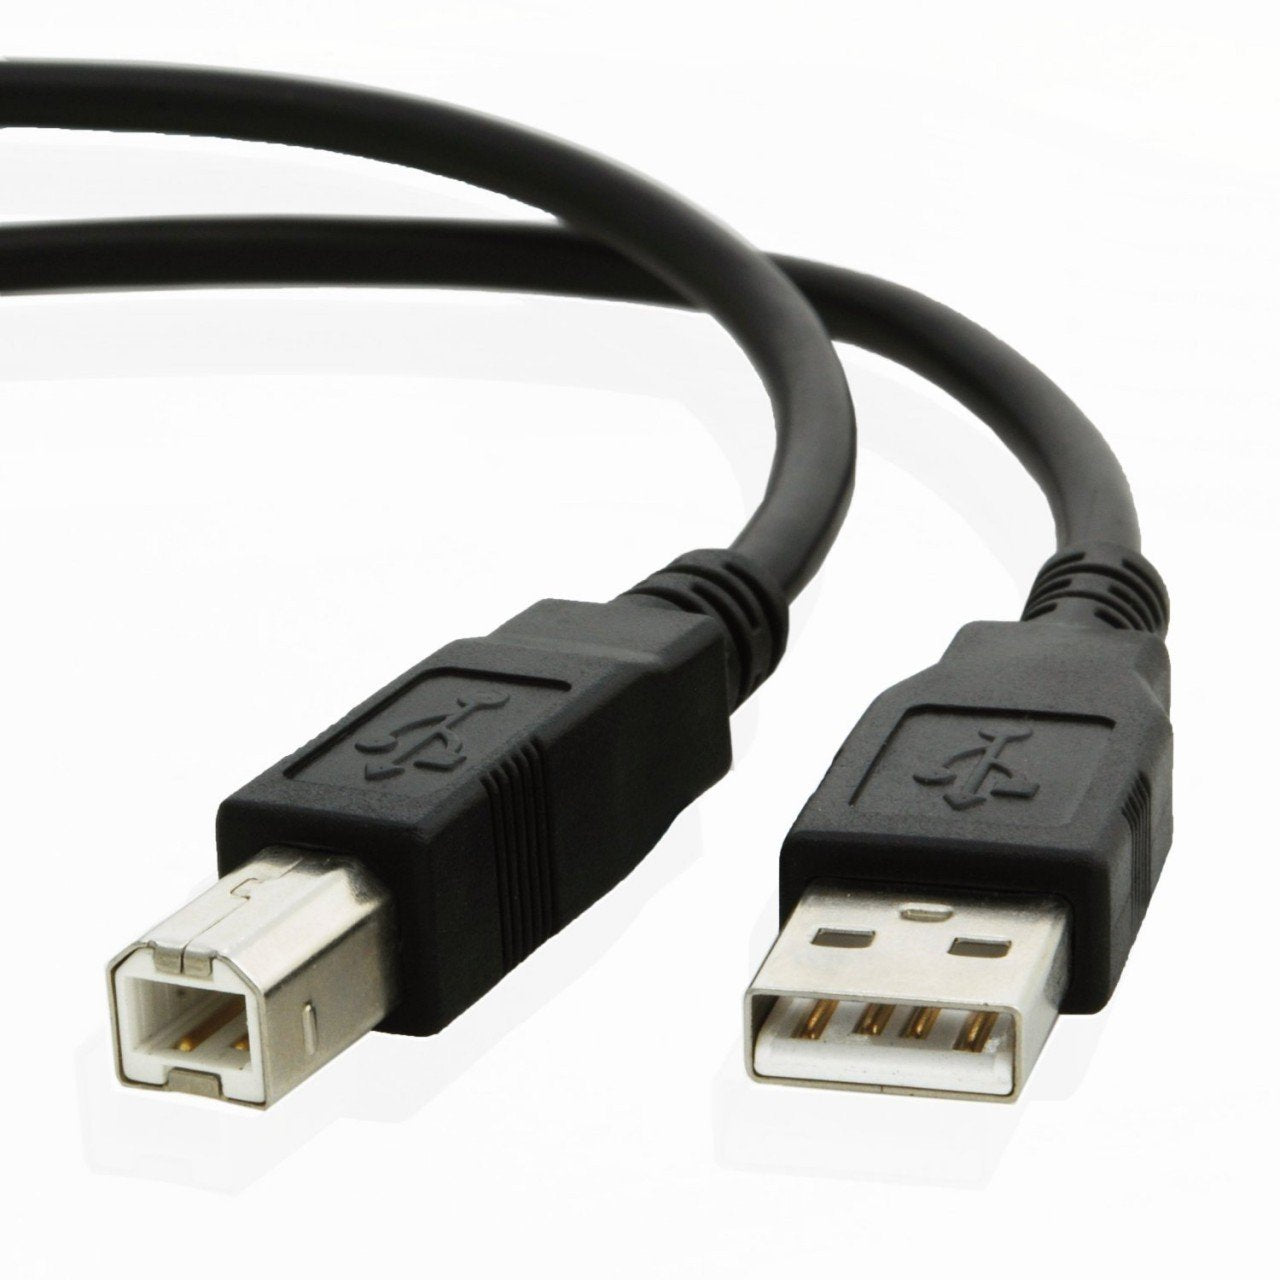 USB cable for Canon PIXMA MX7600